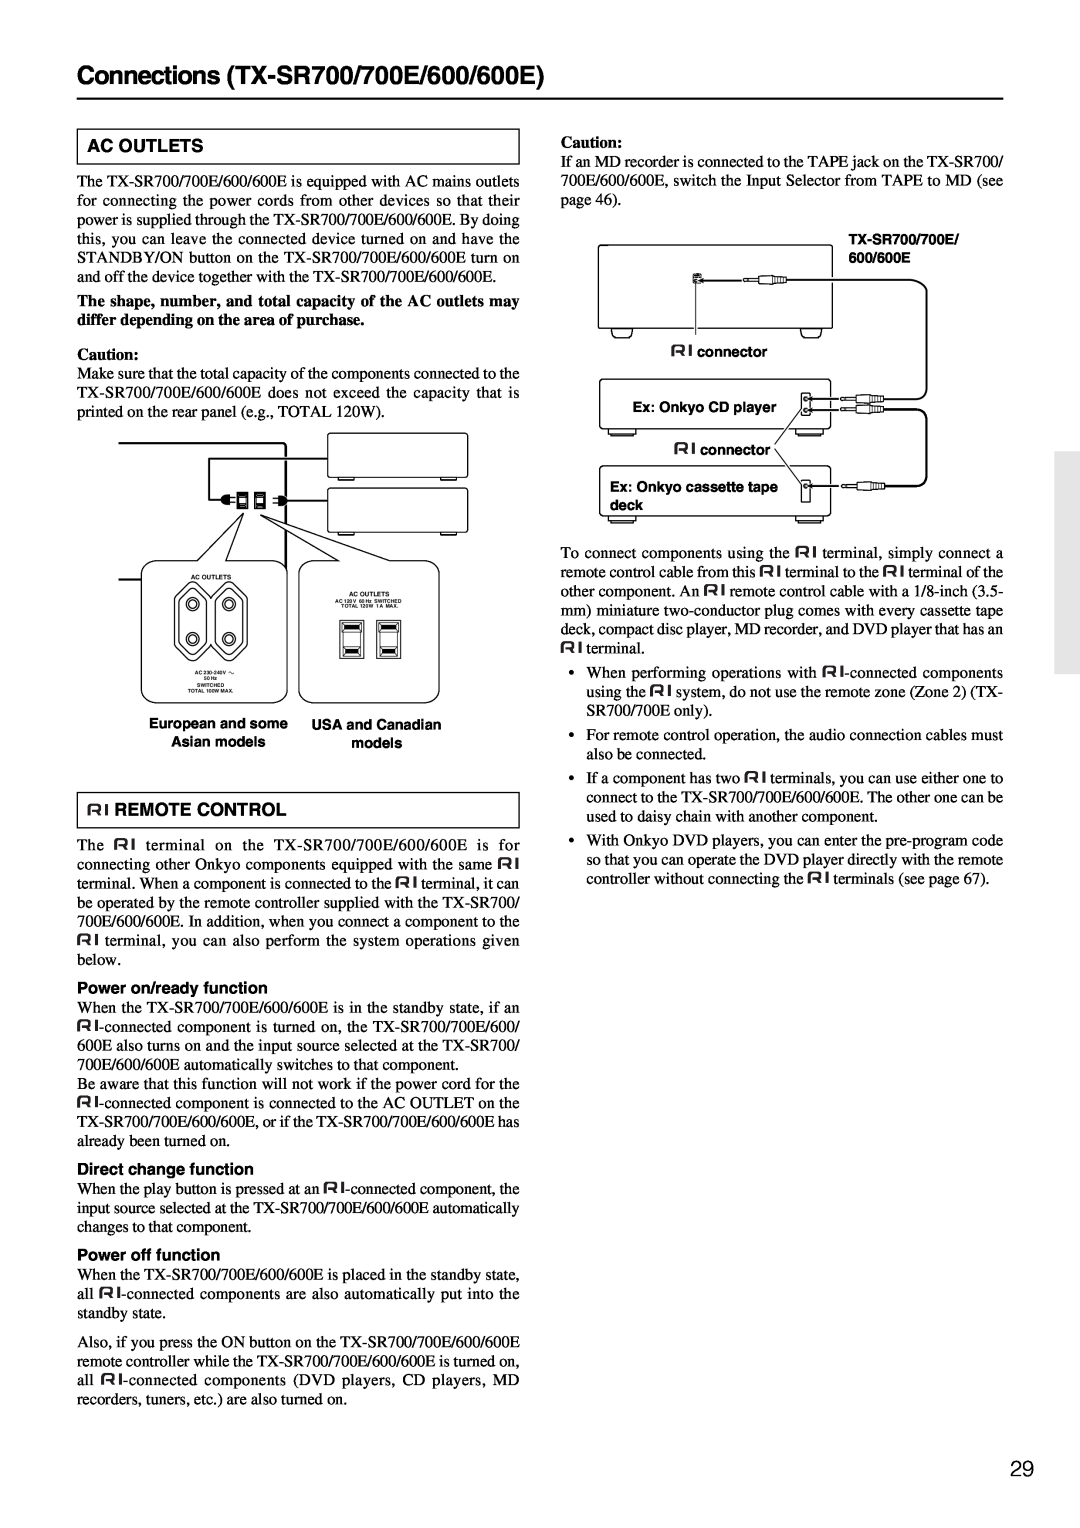 Onkyo TX-SR600/600E instruction manual Connections TX-SR700/700E/600/600E, Ac Outlets, Remote Control 